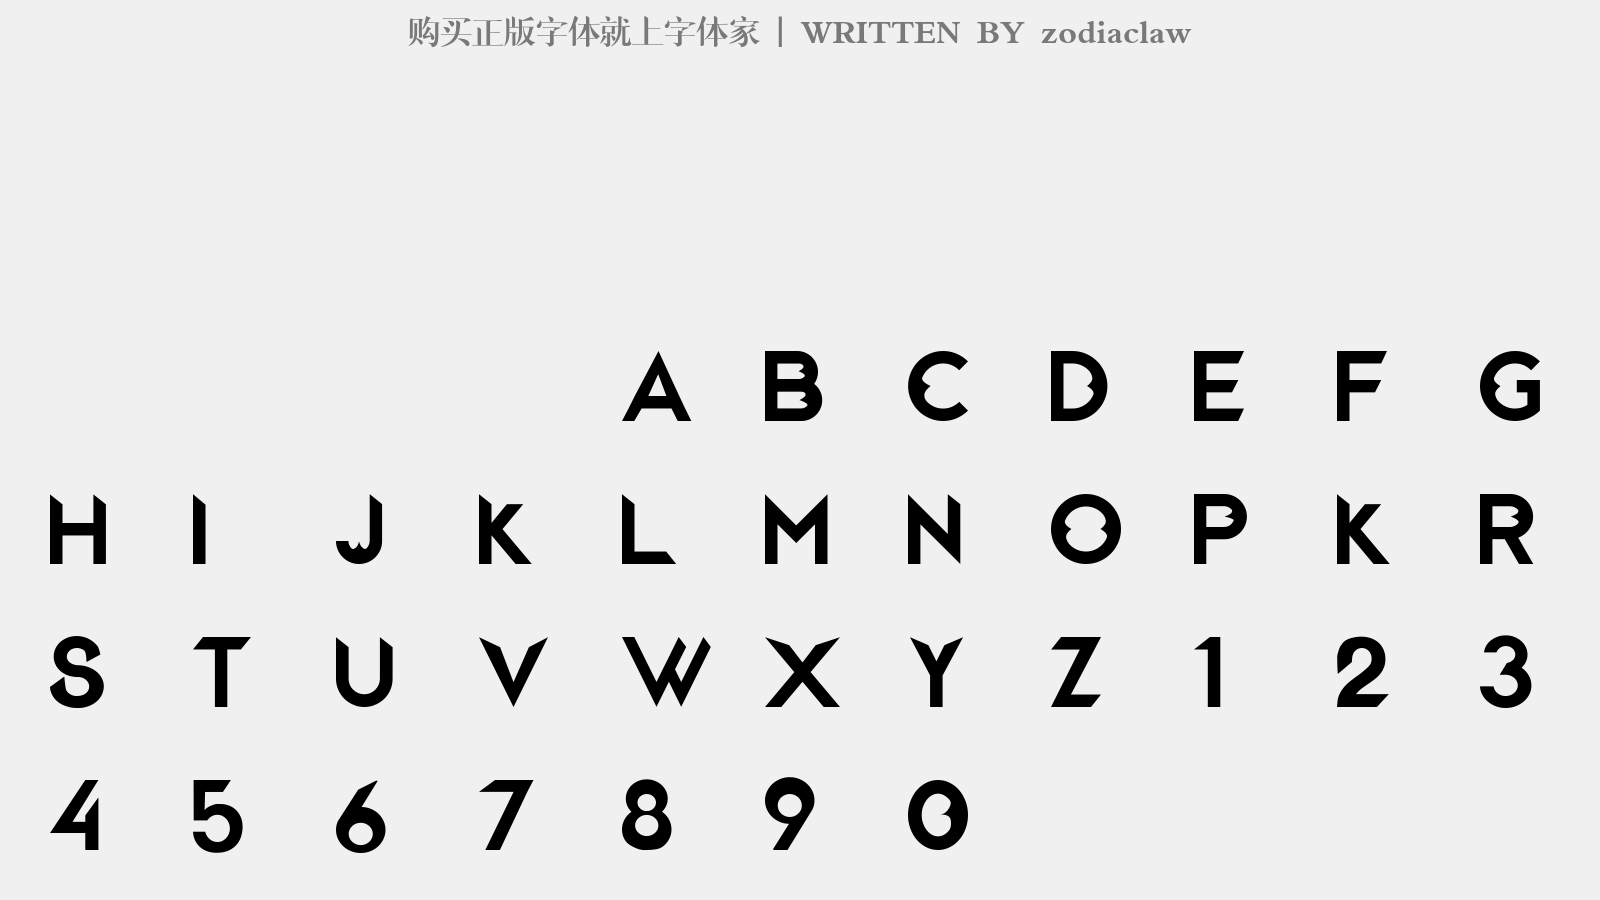 zodiaclaw - 大写字母/小写字母/数字